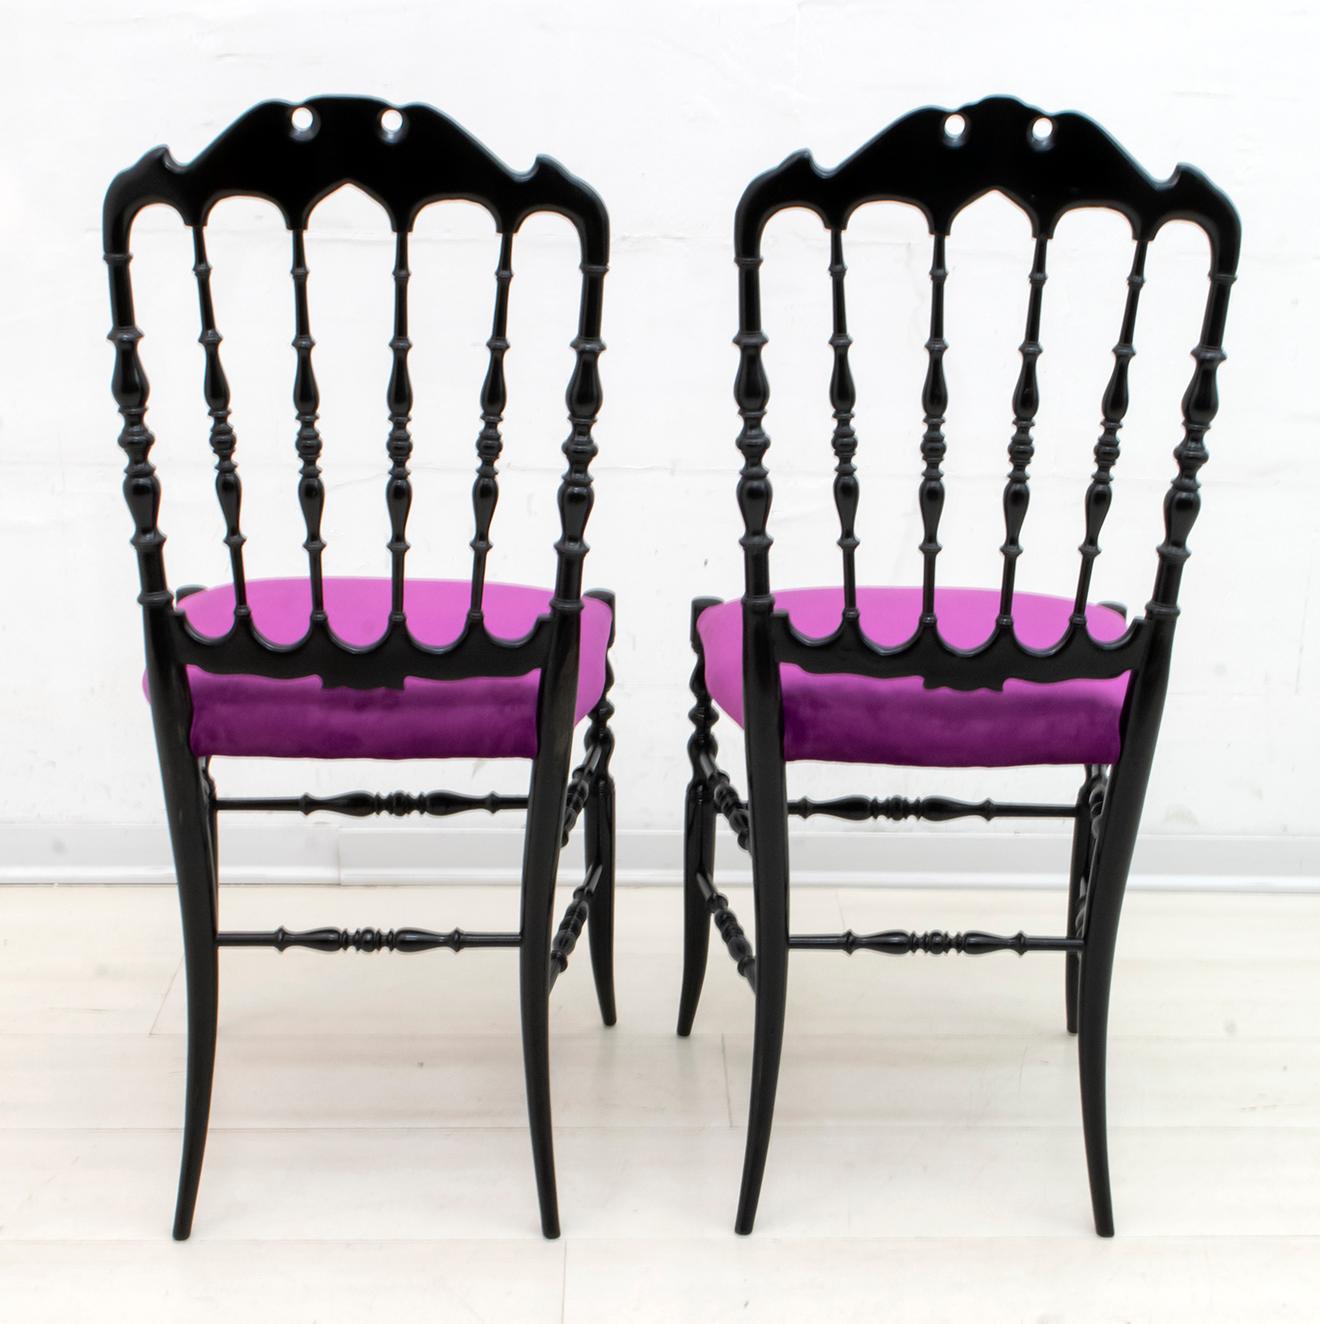 Pair of Giuseppe Gaetano Descalzi Midcentury Italian Chiavari Chairs, 1950s For Sale 3